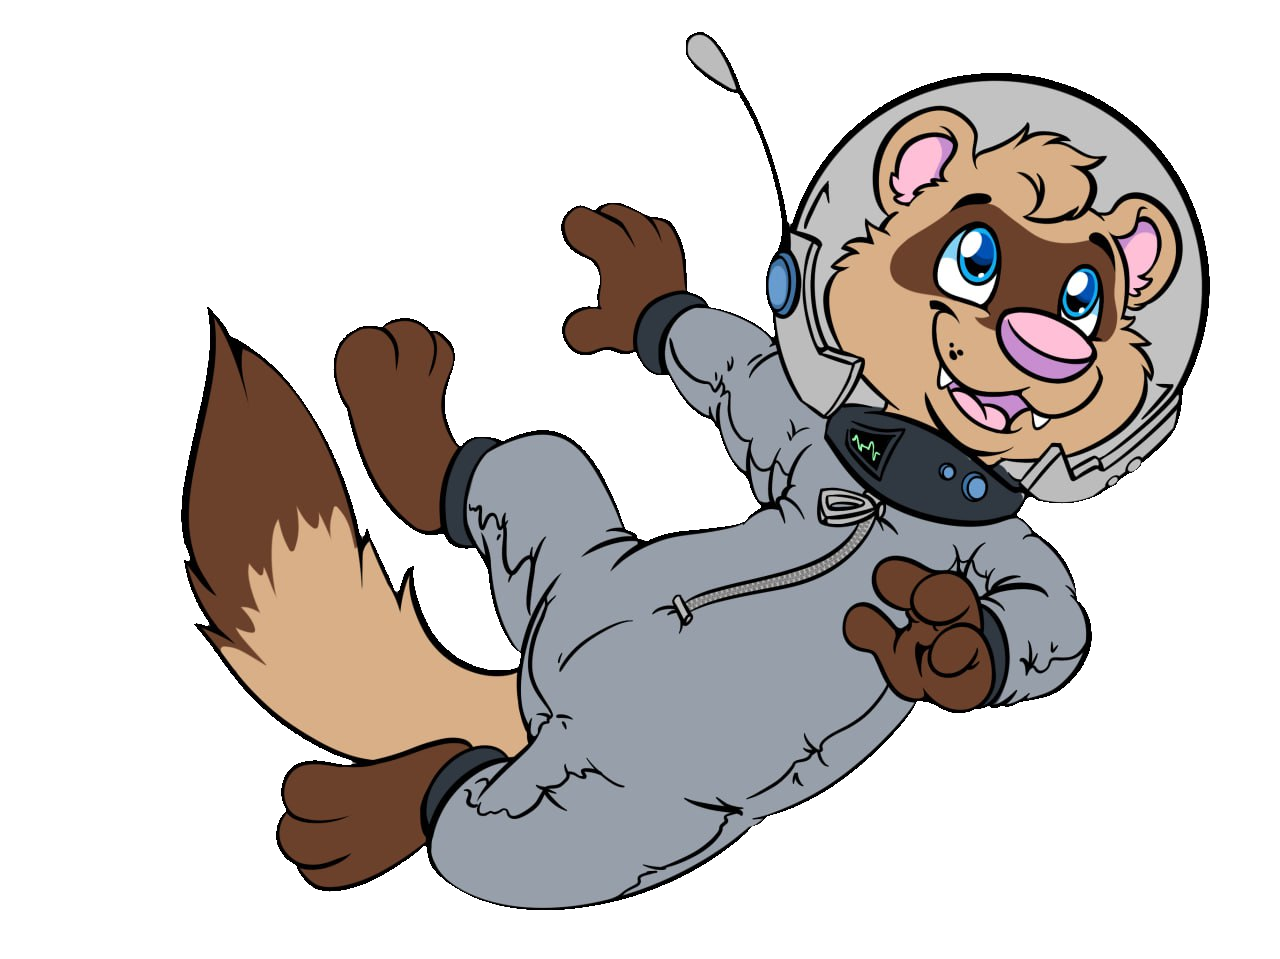 Furcation 2023 logo depicting ferret mascot Frankie in space suit.